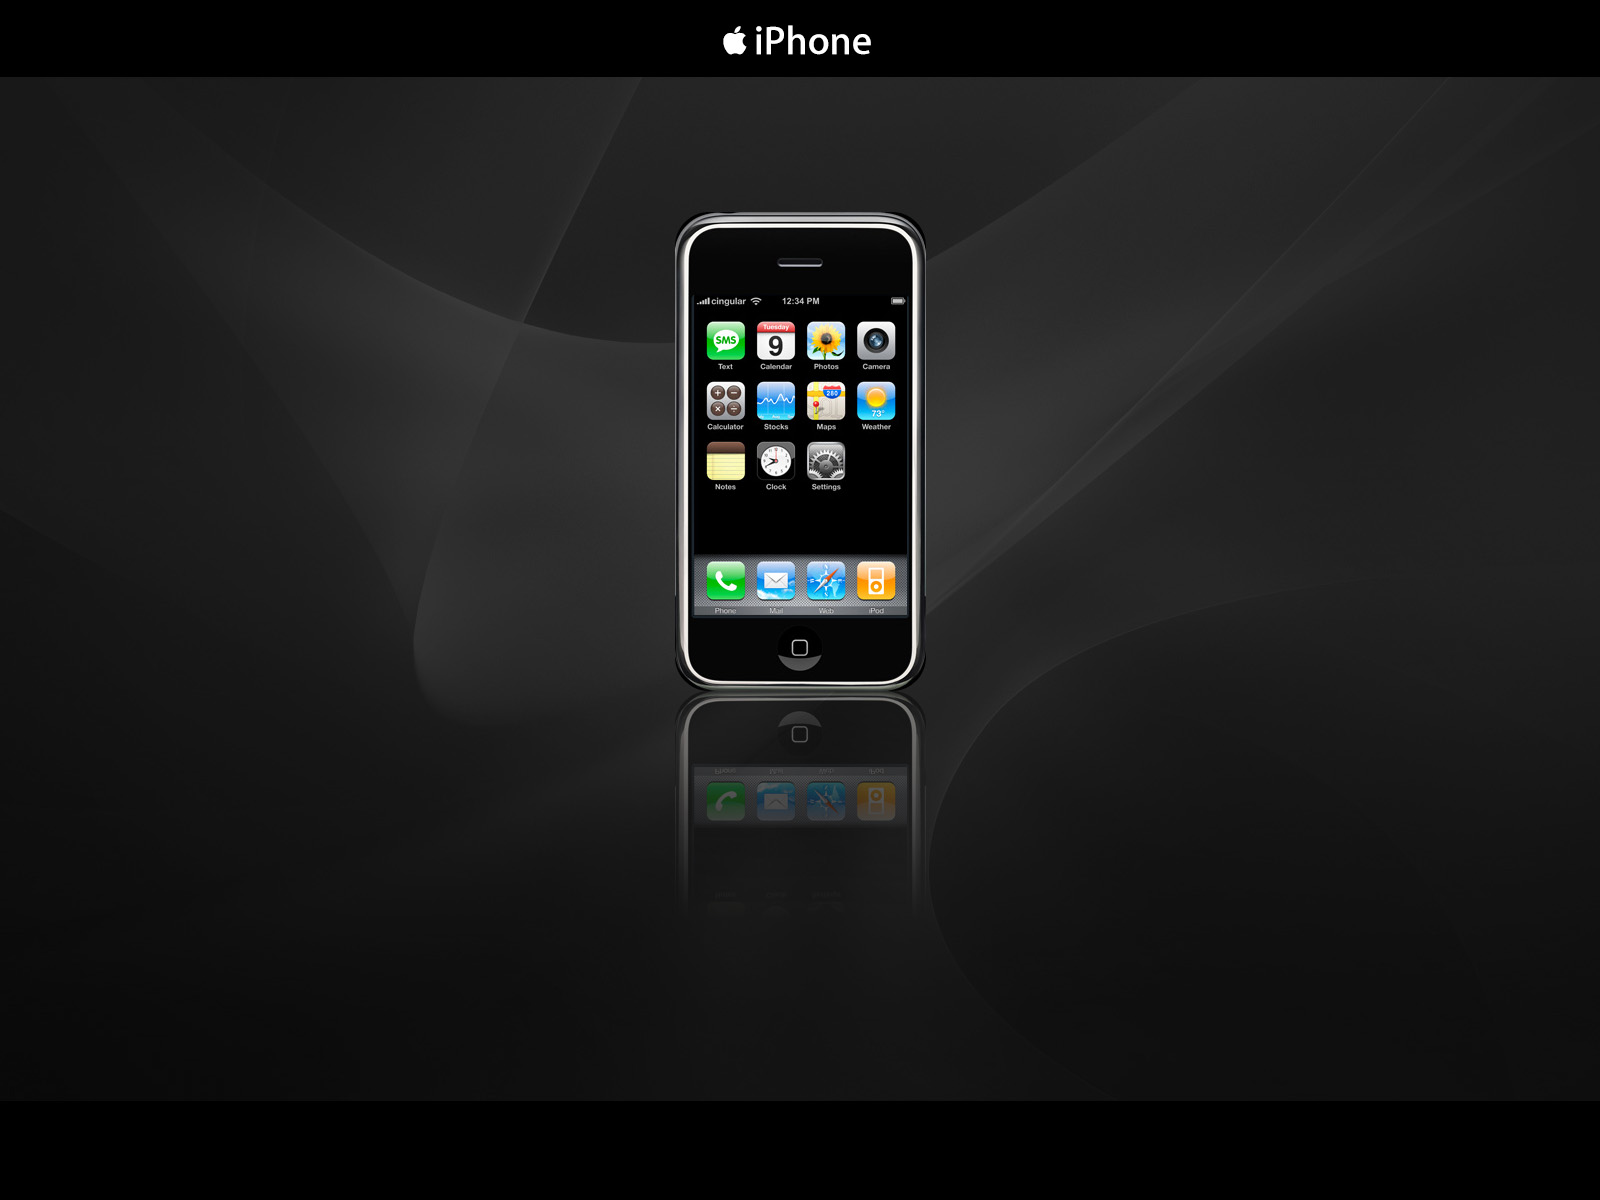  iphone in dark 640 x 960 39 kb jpeg elemental apple iphone wallpaper 1600x1200